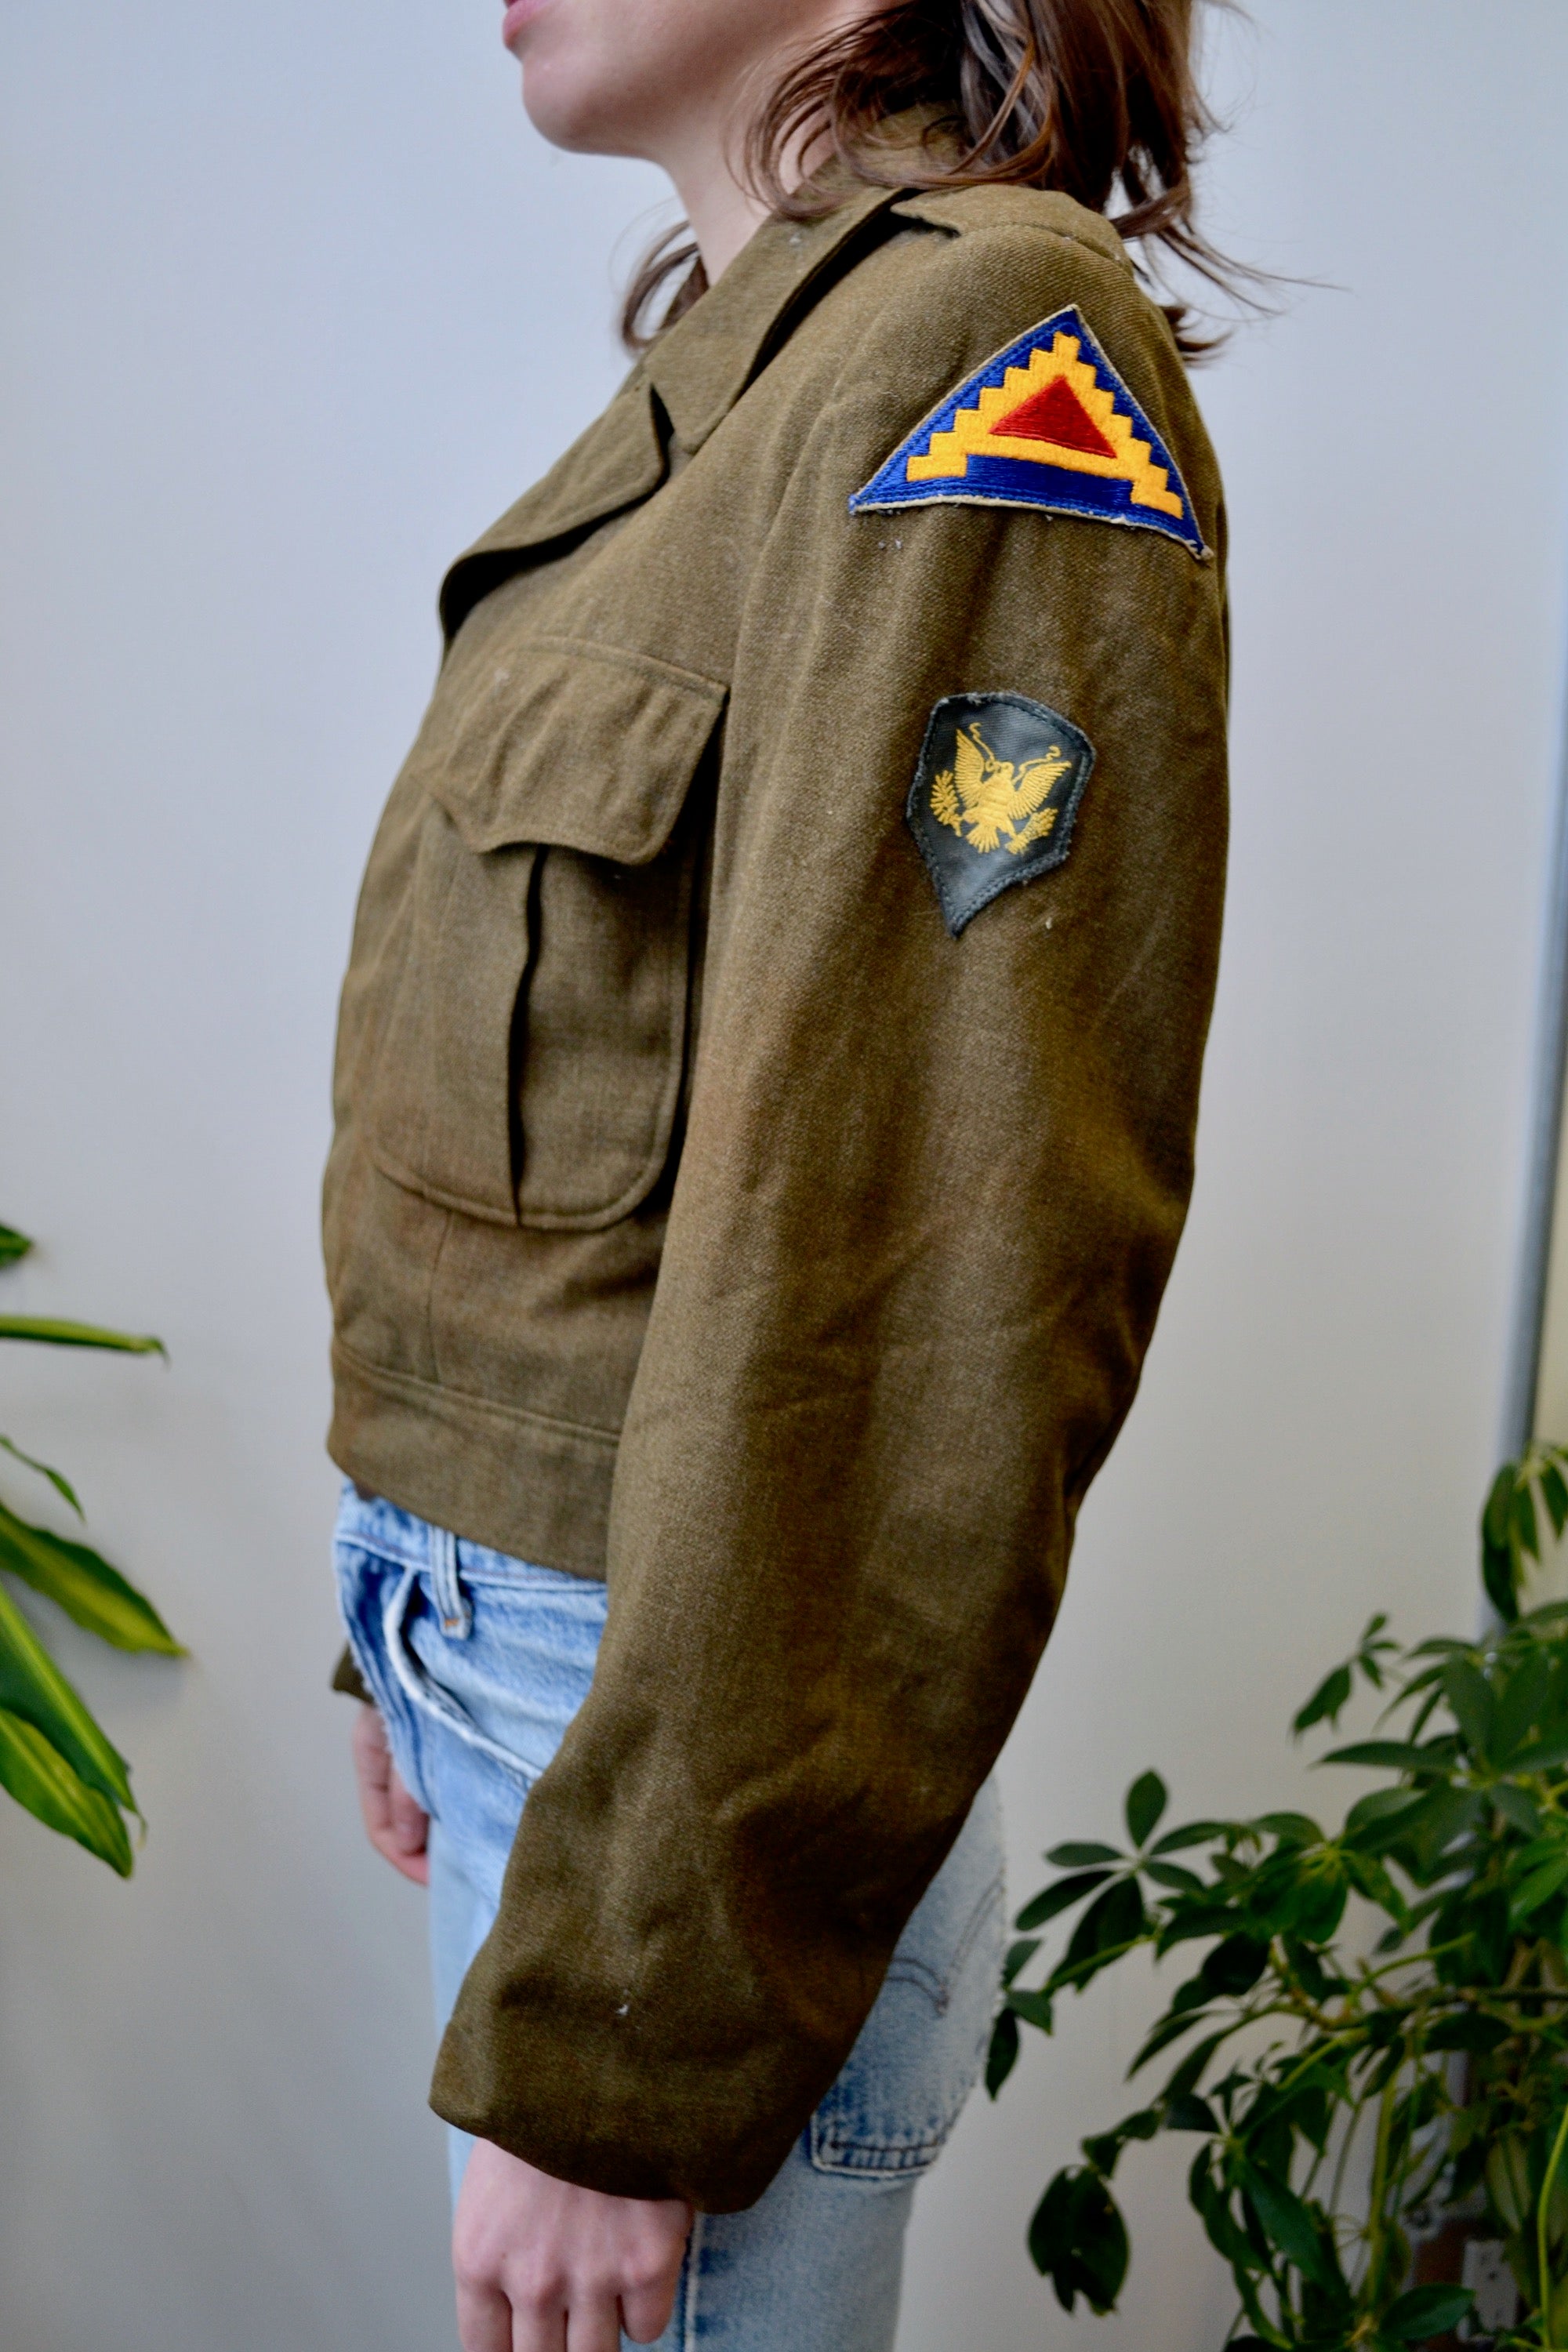 Forties/Fifties "Ike" Military Jacket